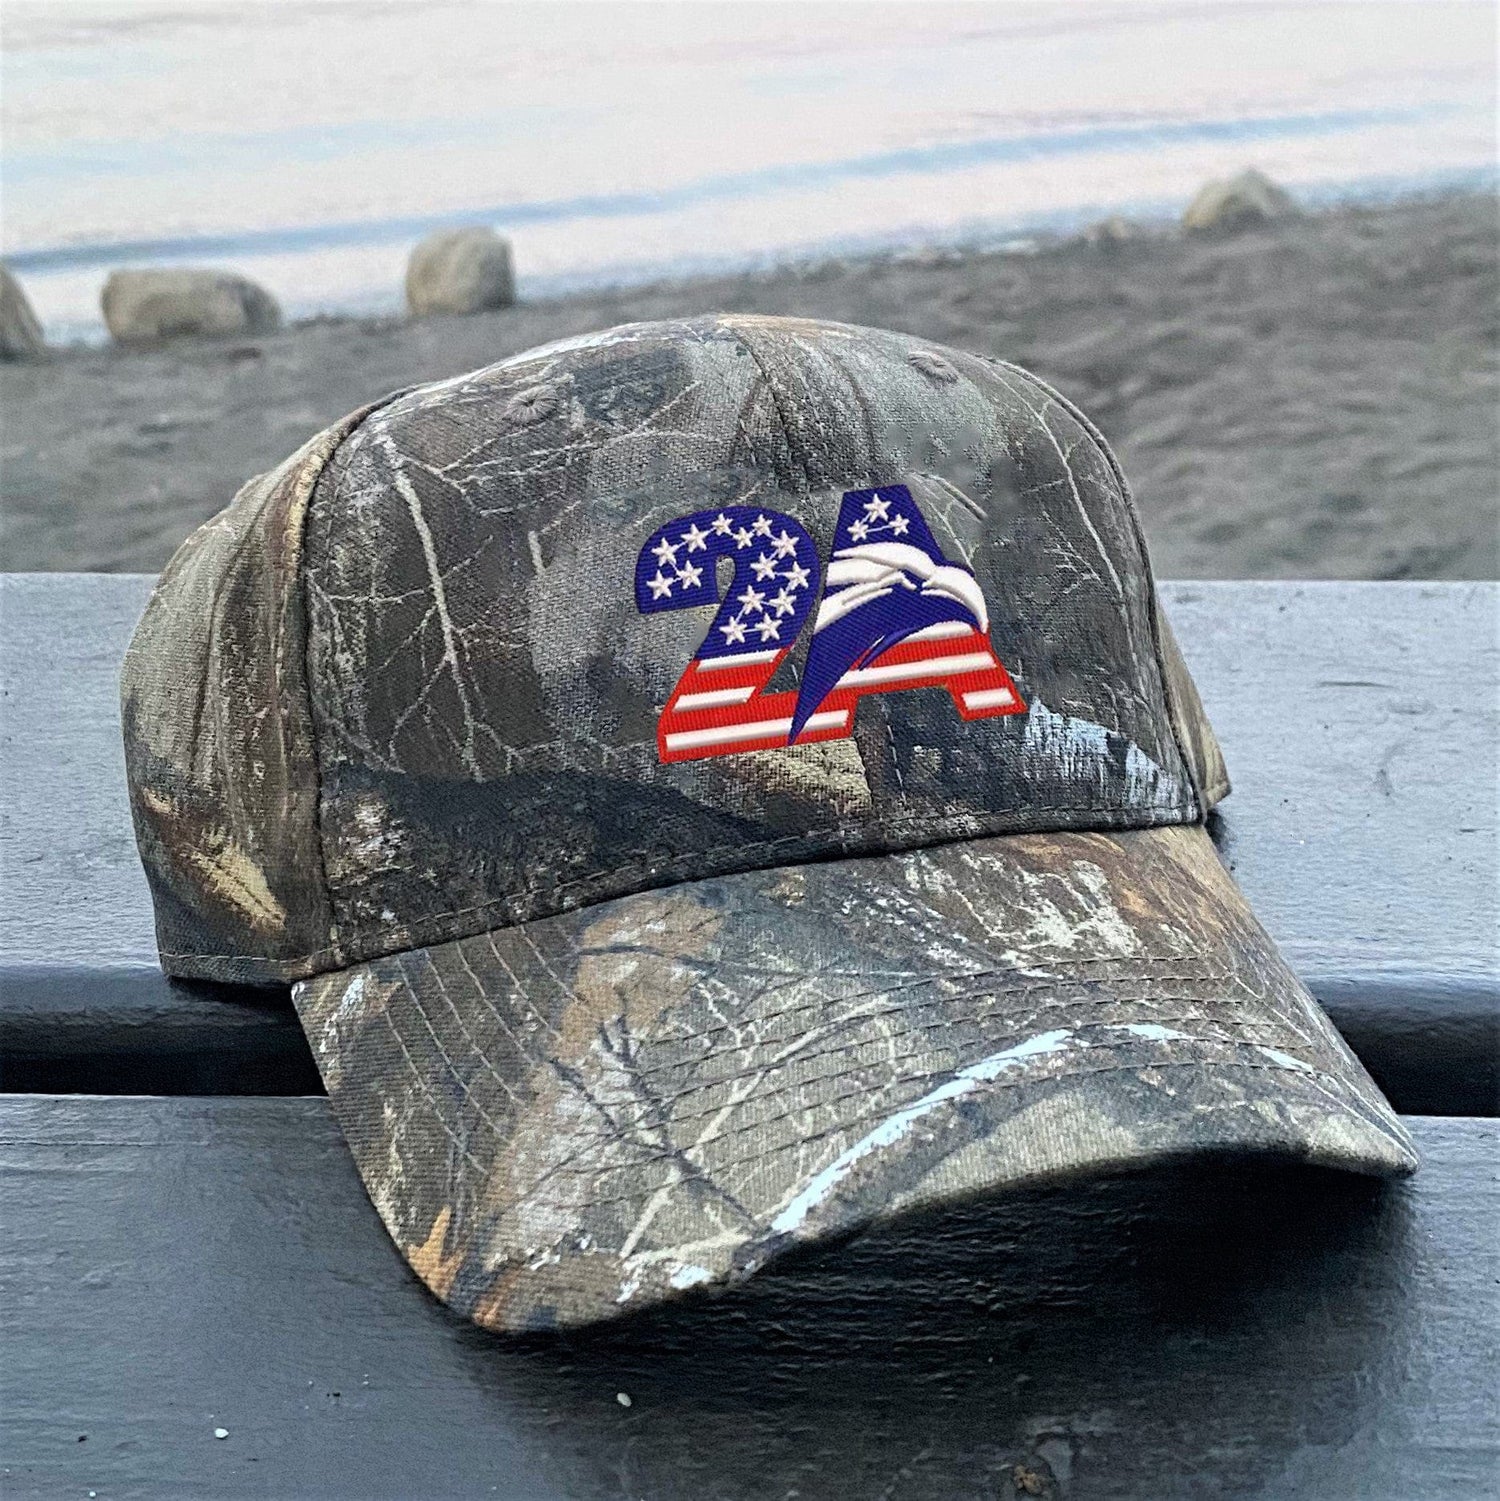 2nd Amendment Premium Hat